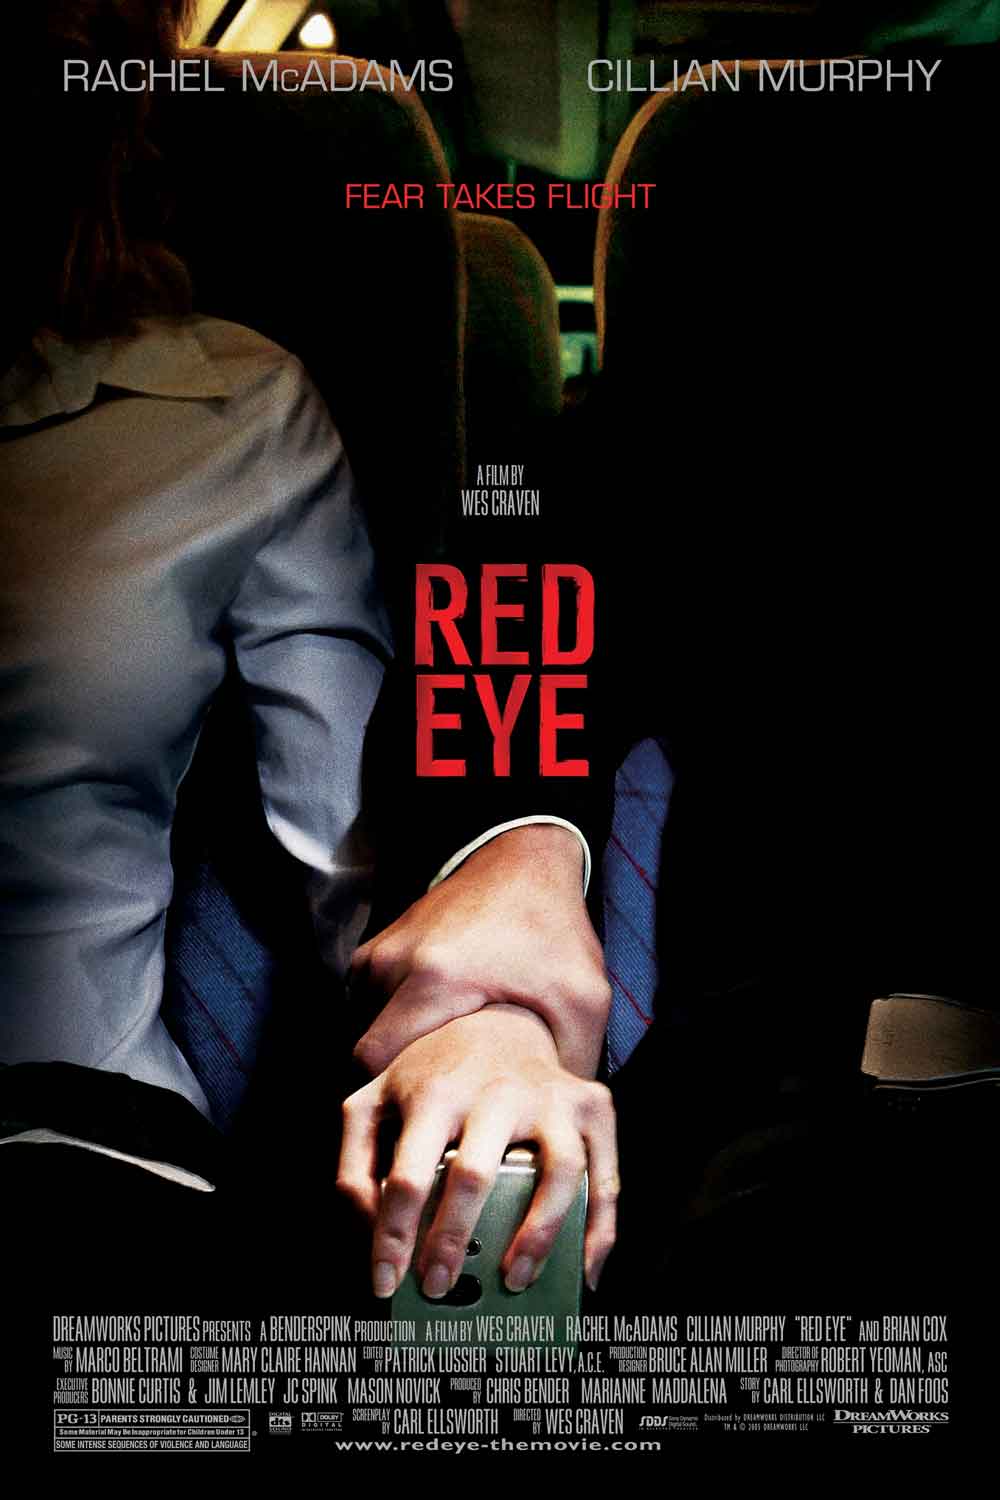 Vuelo nocturno (Red Eye) - Cillian Murphy